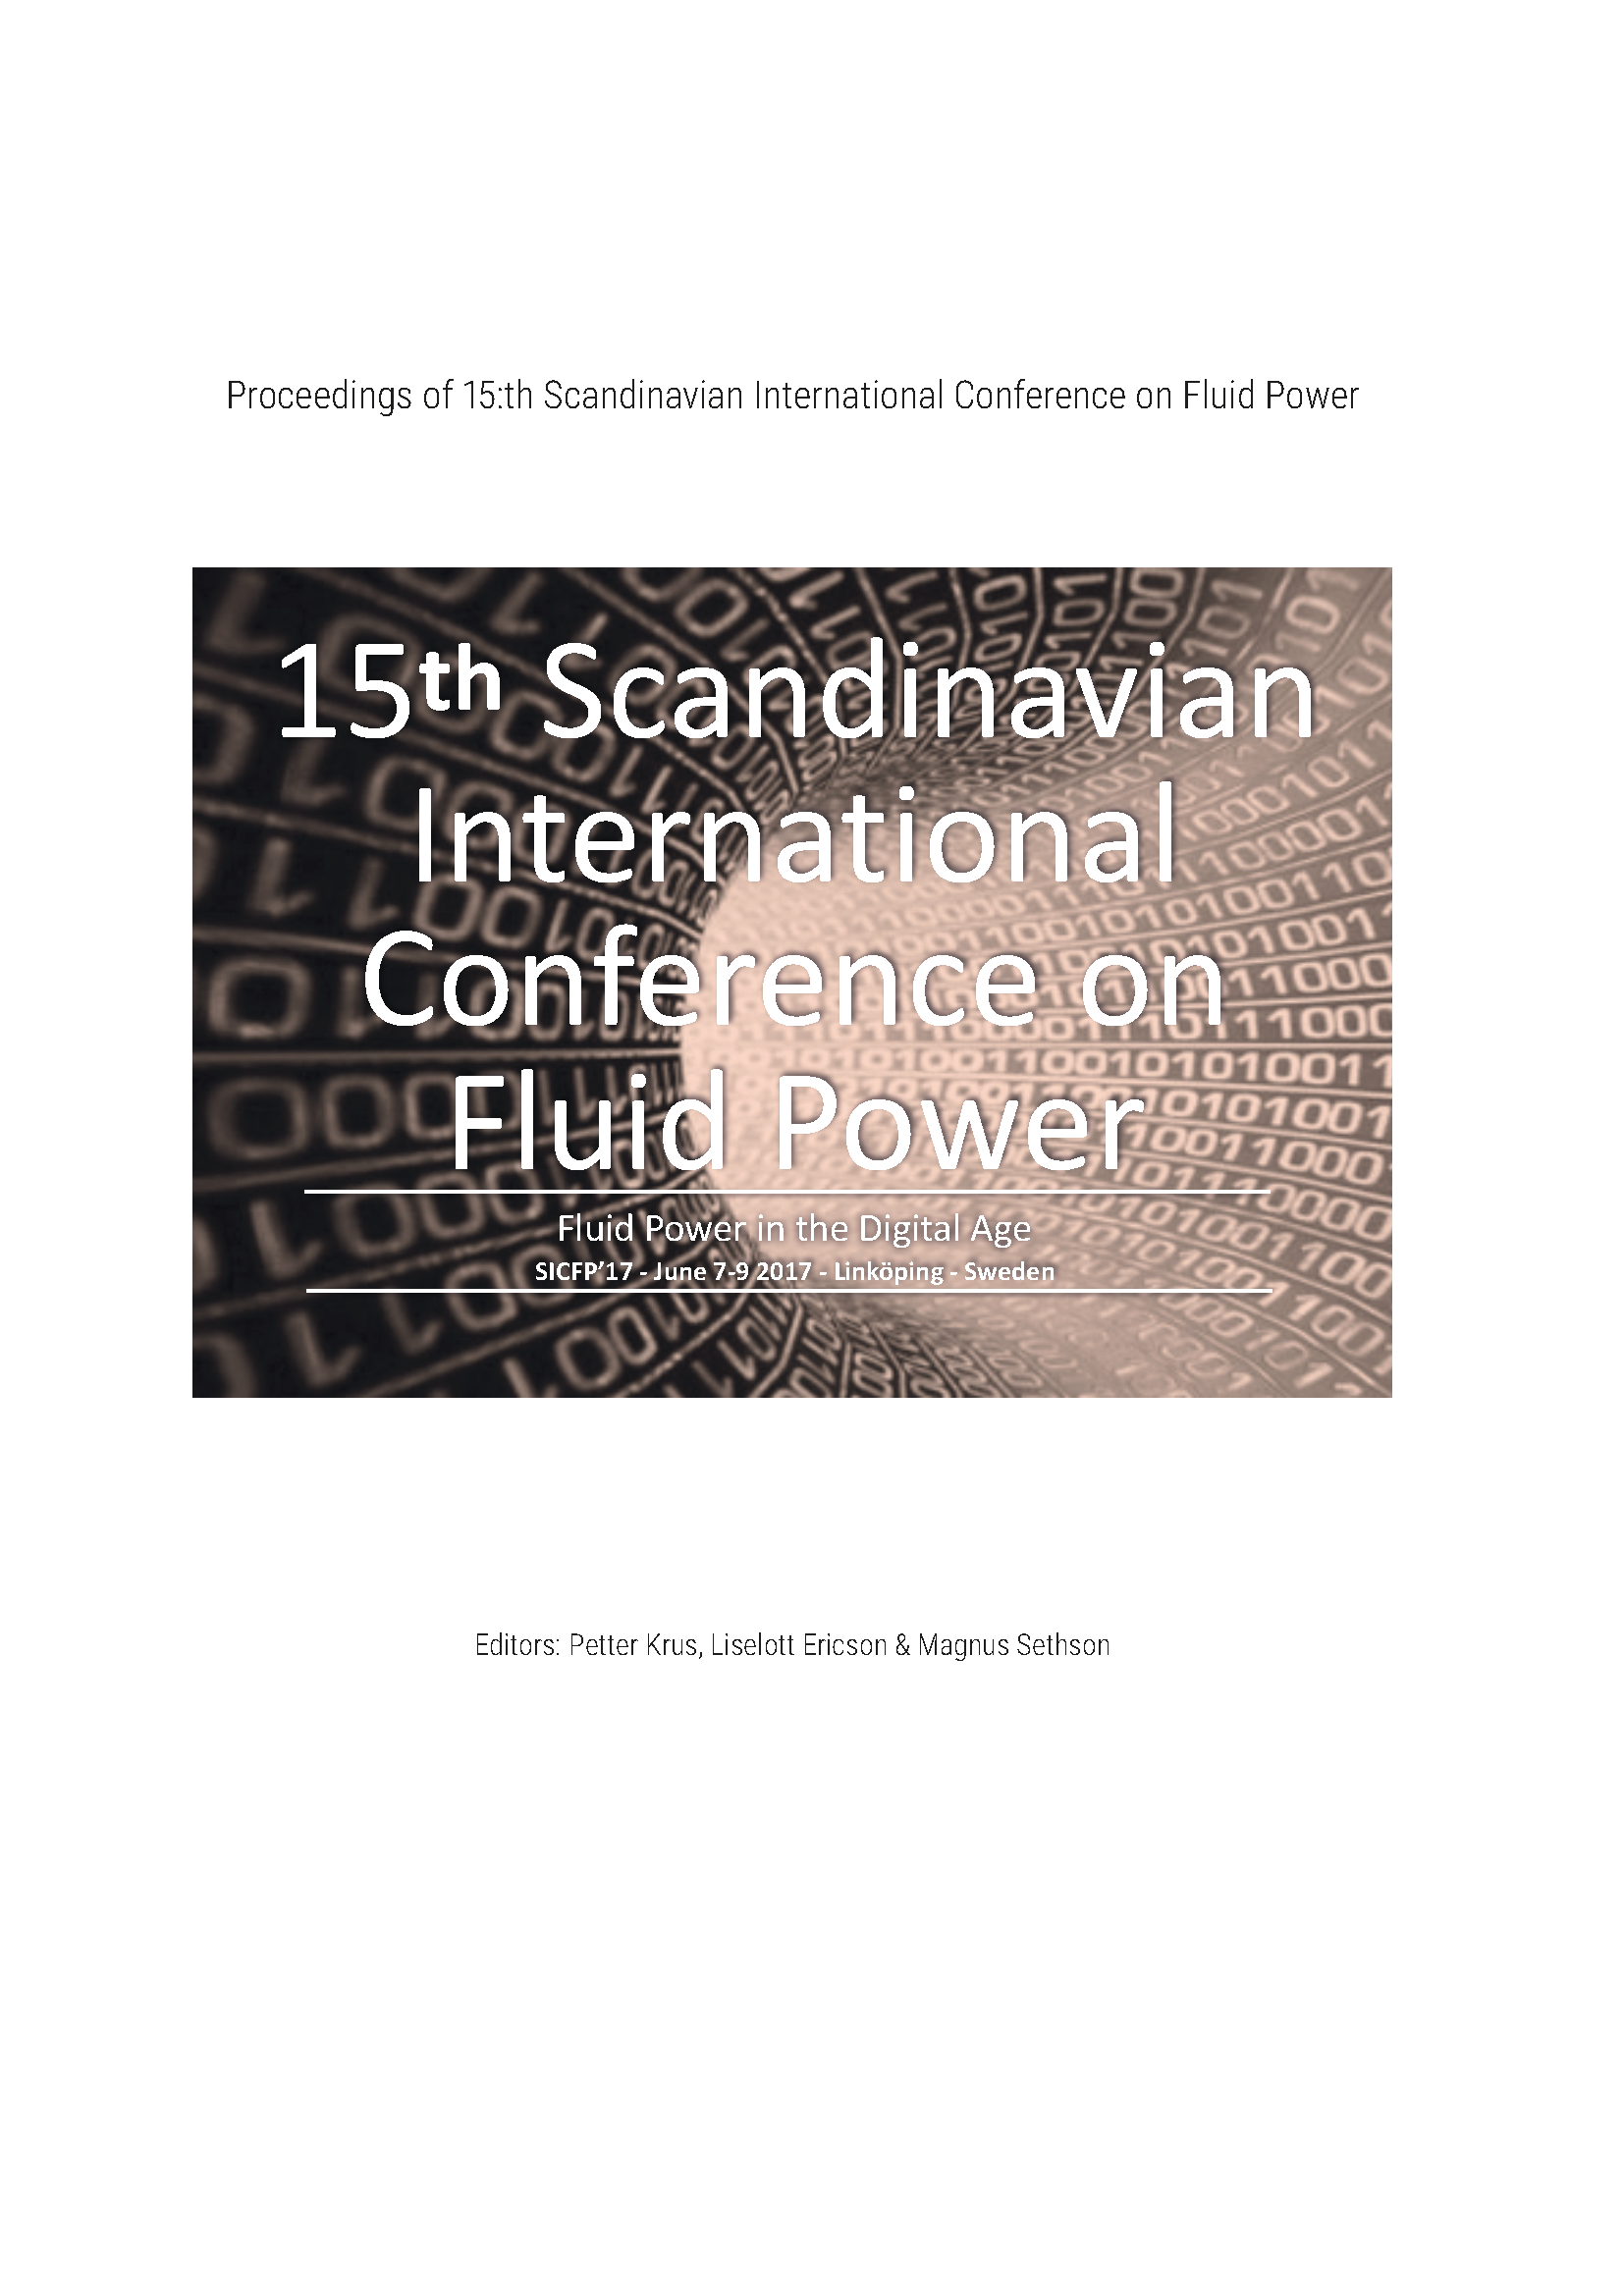 					View Proceedings of 15:th Scandinavian International Conference on Fluid Power, June 7-9, 2017, Linköping, Sweden
				